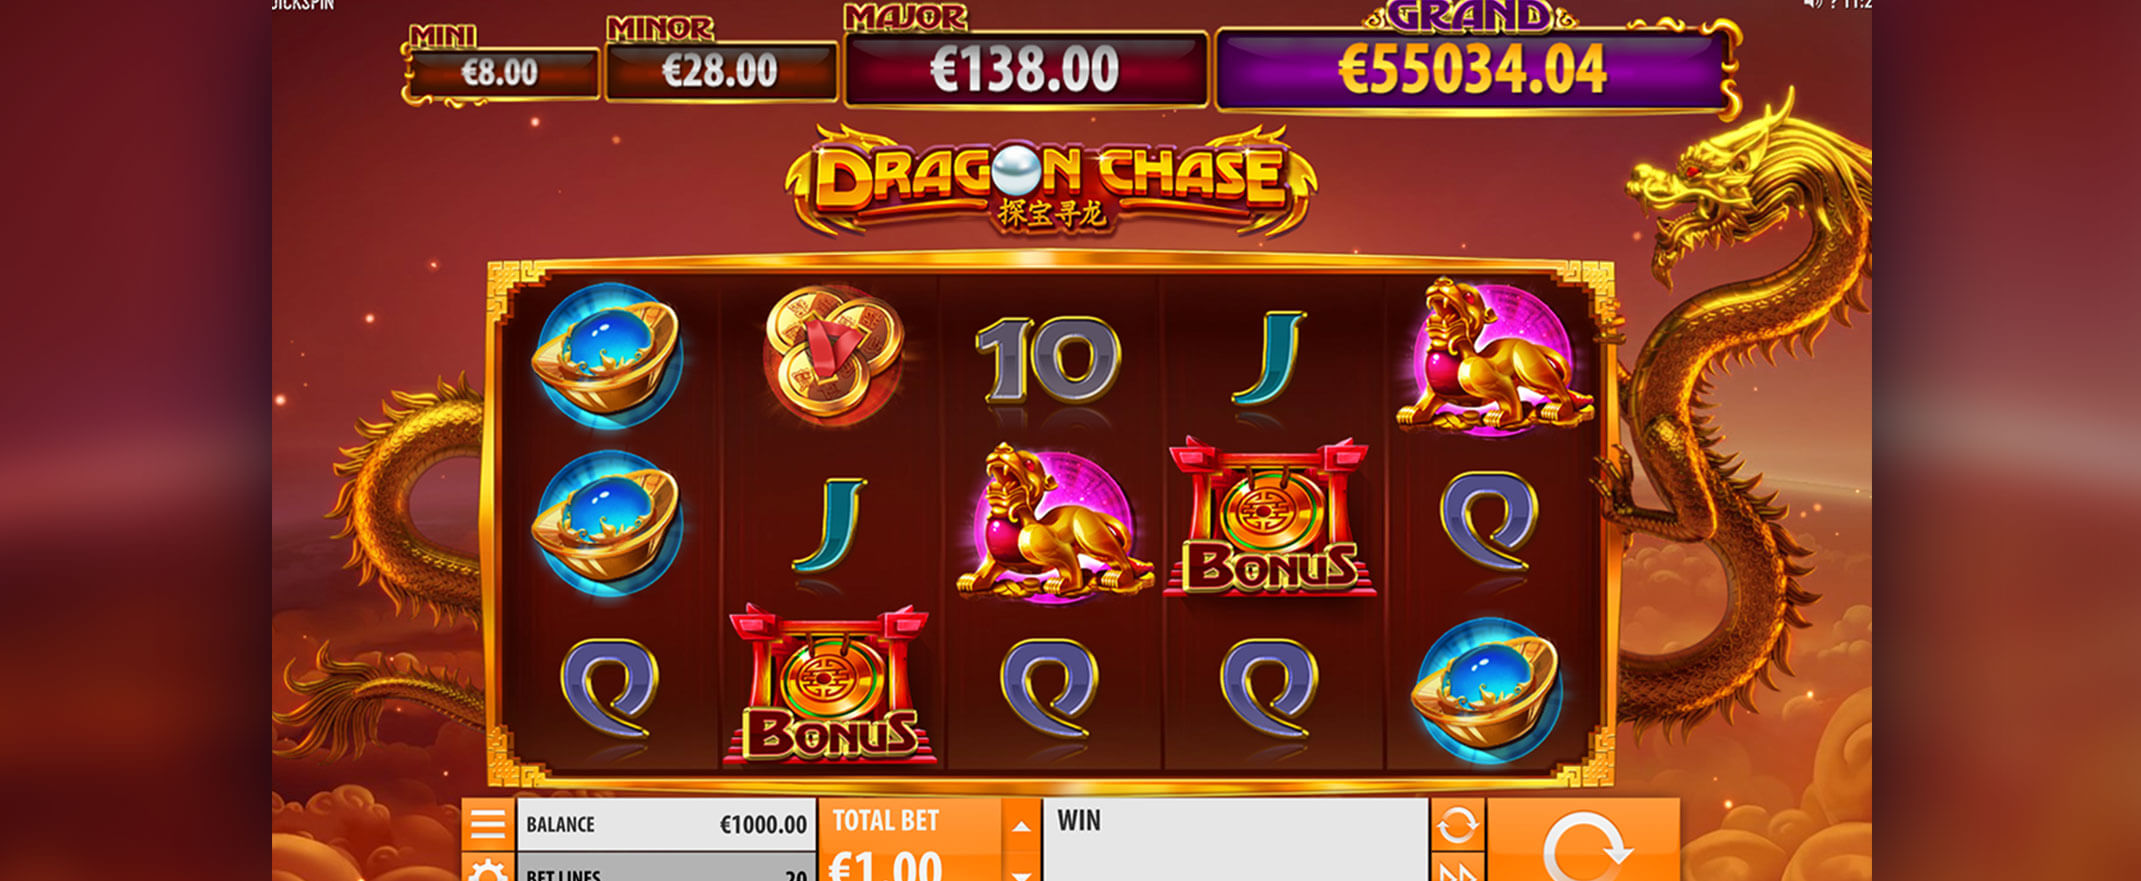 Dragon Chase peliautomaatti Quickspinilta